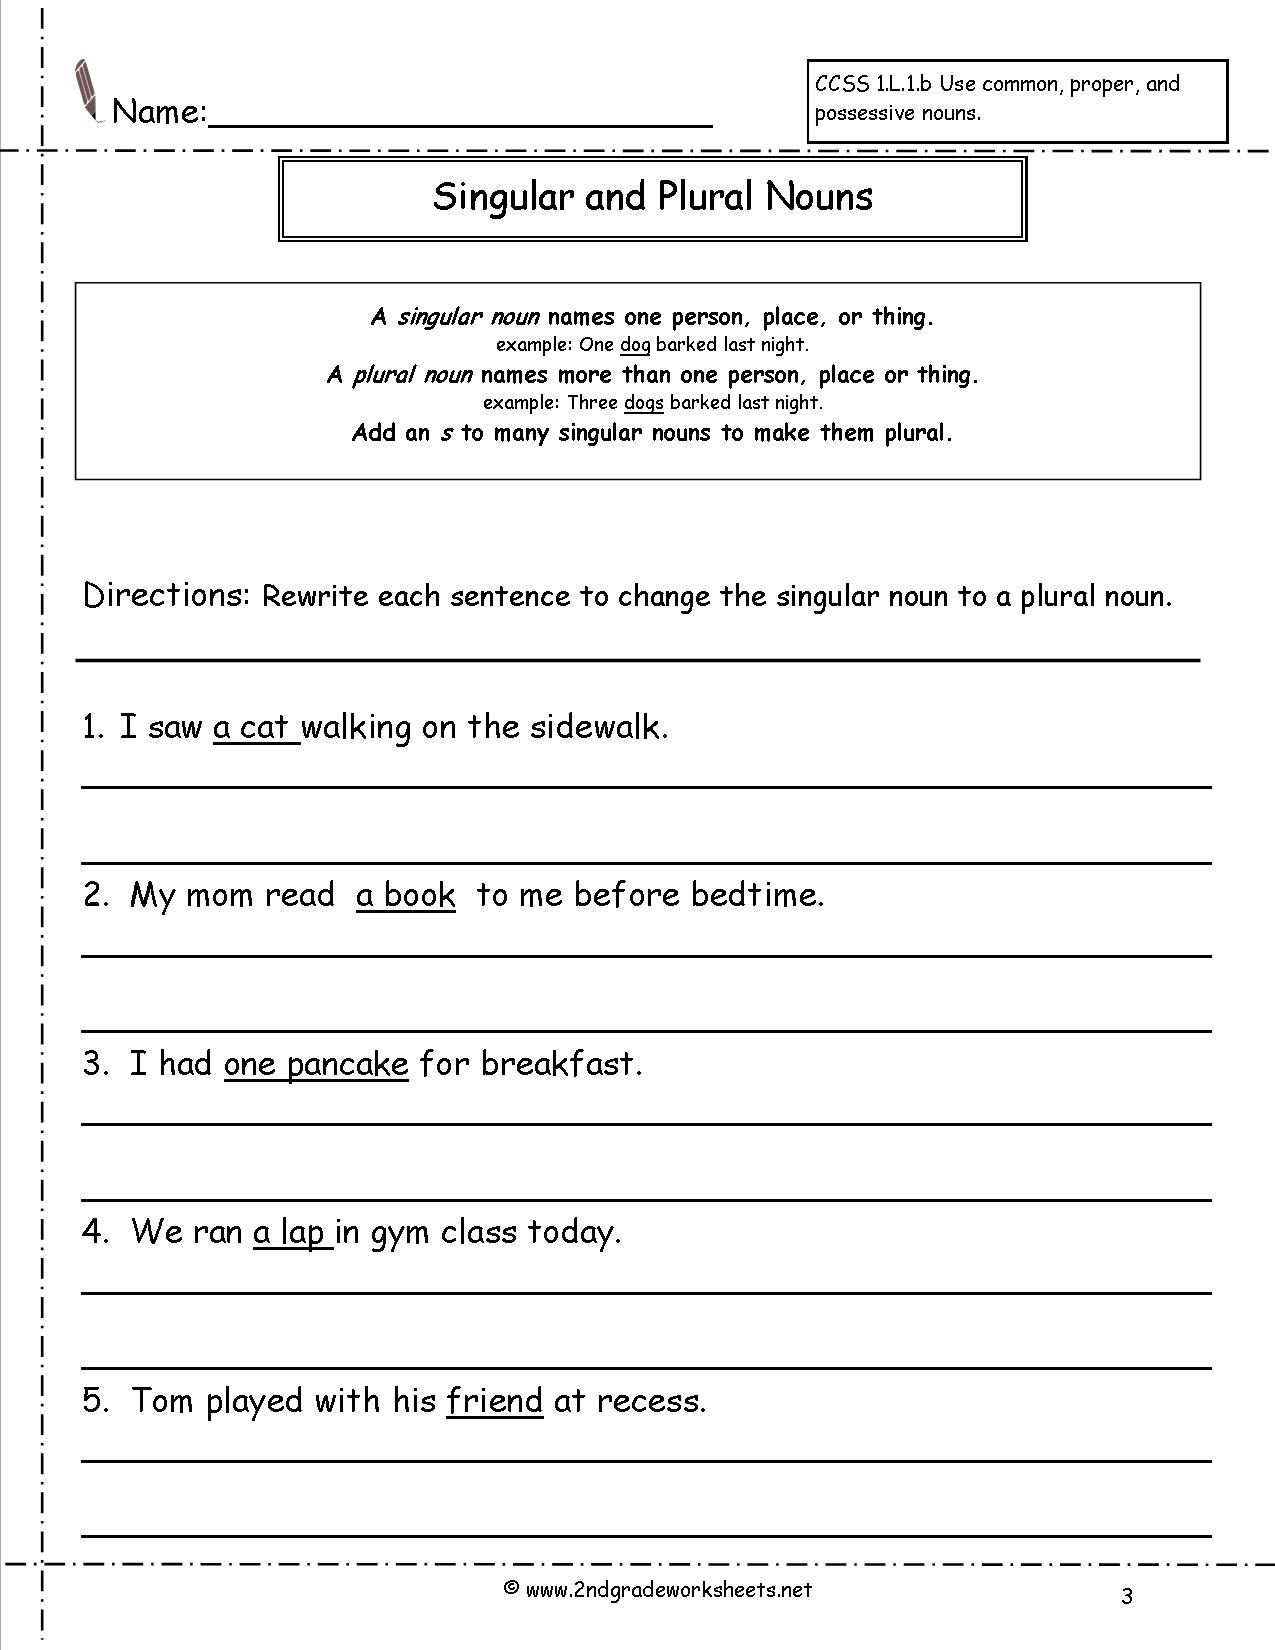 Singular and Plural Nouns Worksheets Image